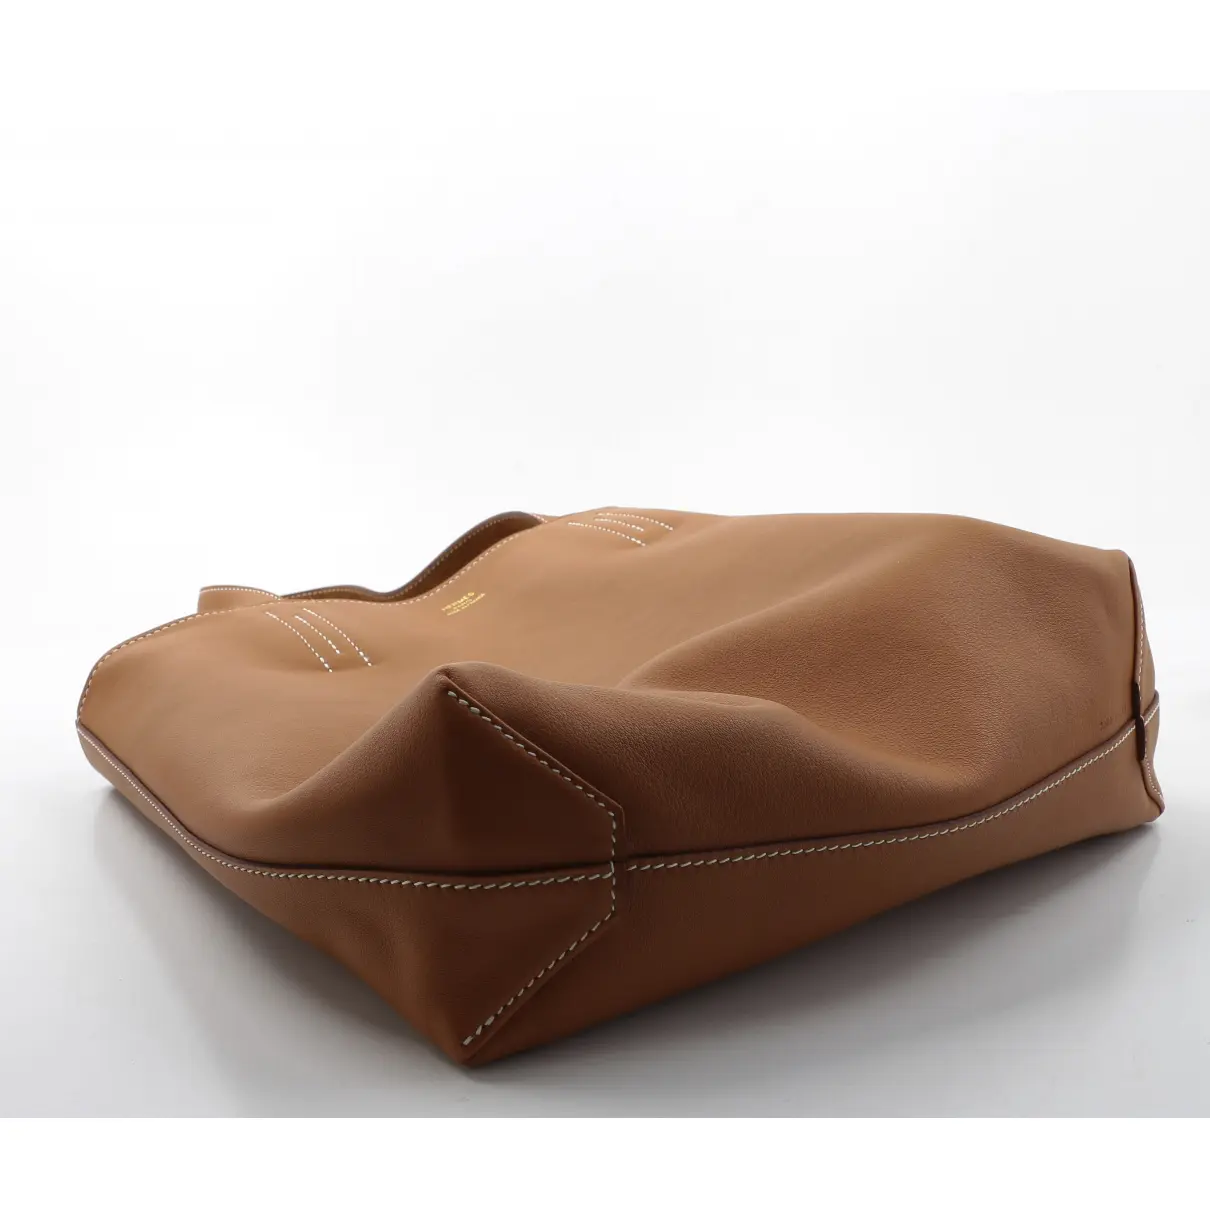 Double sens leather handbag Hermès